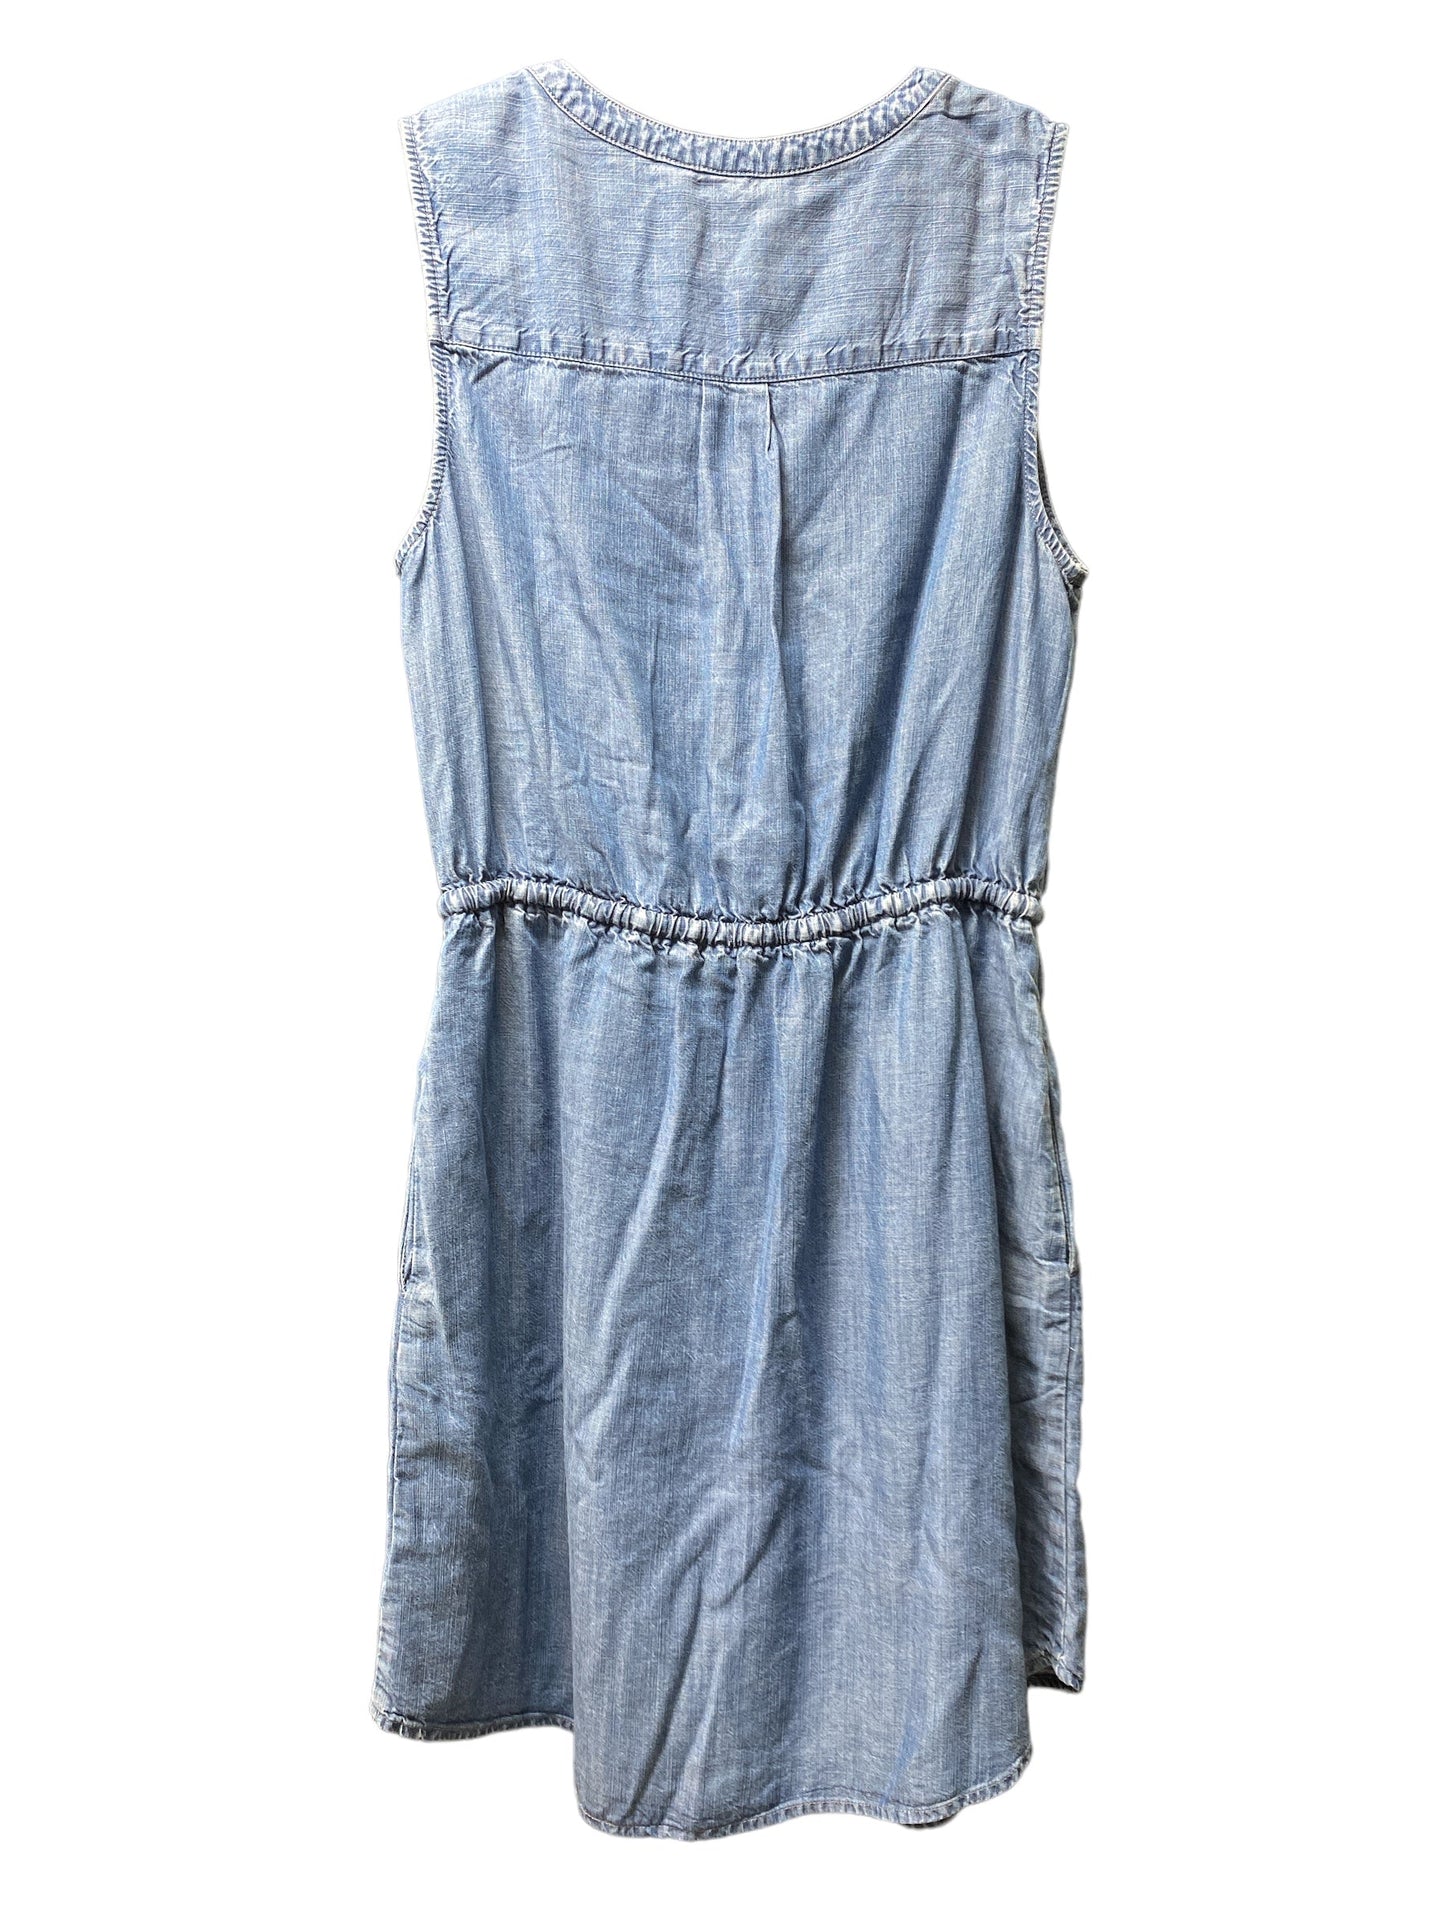 Blue Denim Dress Casual Short Gap, Size Xs